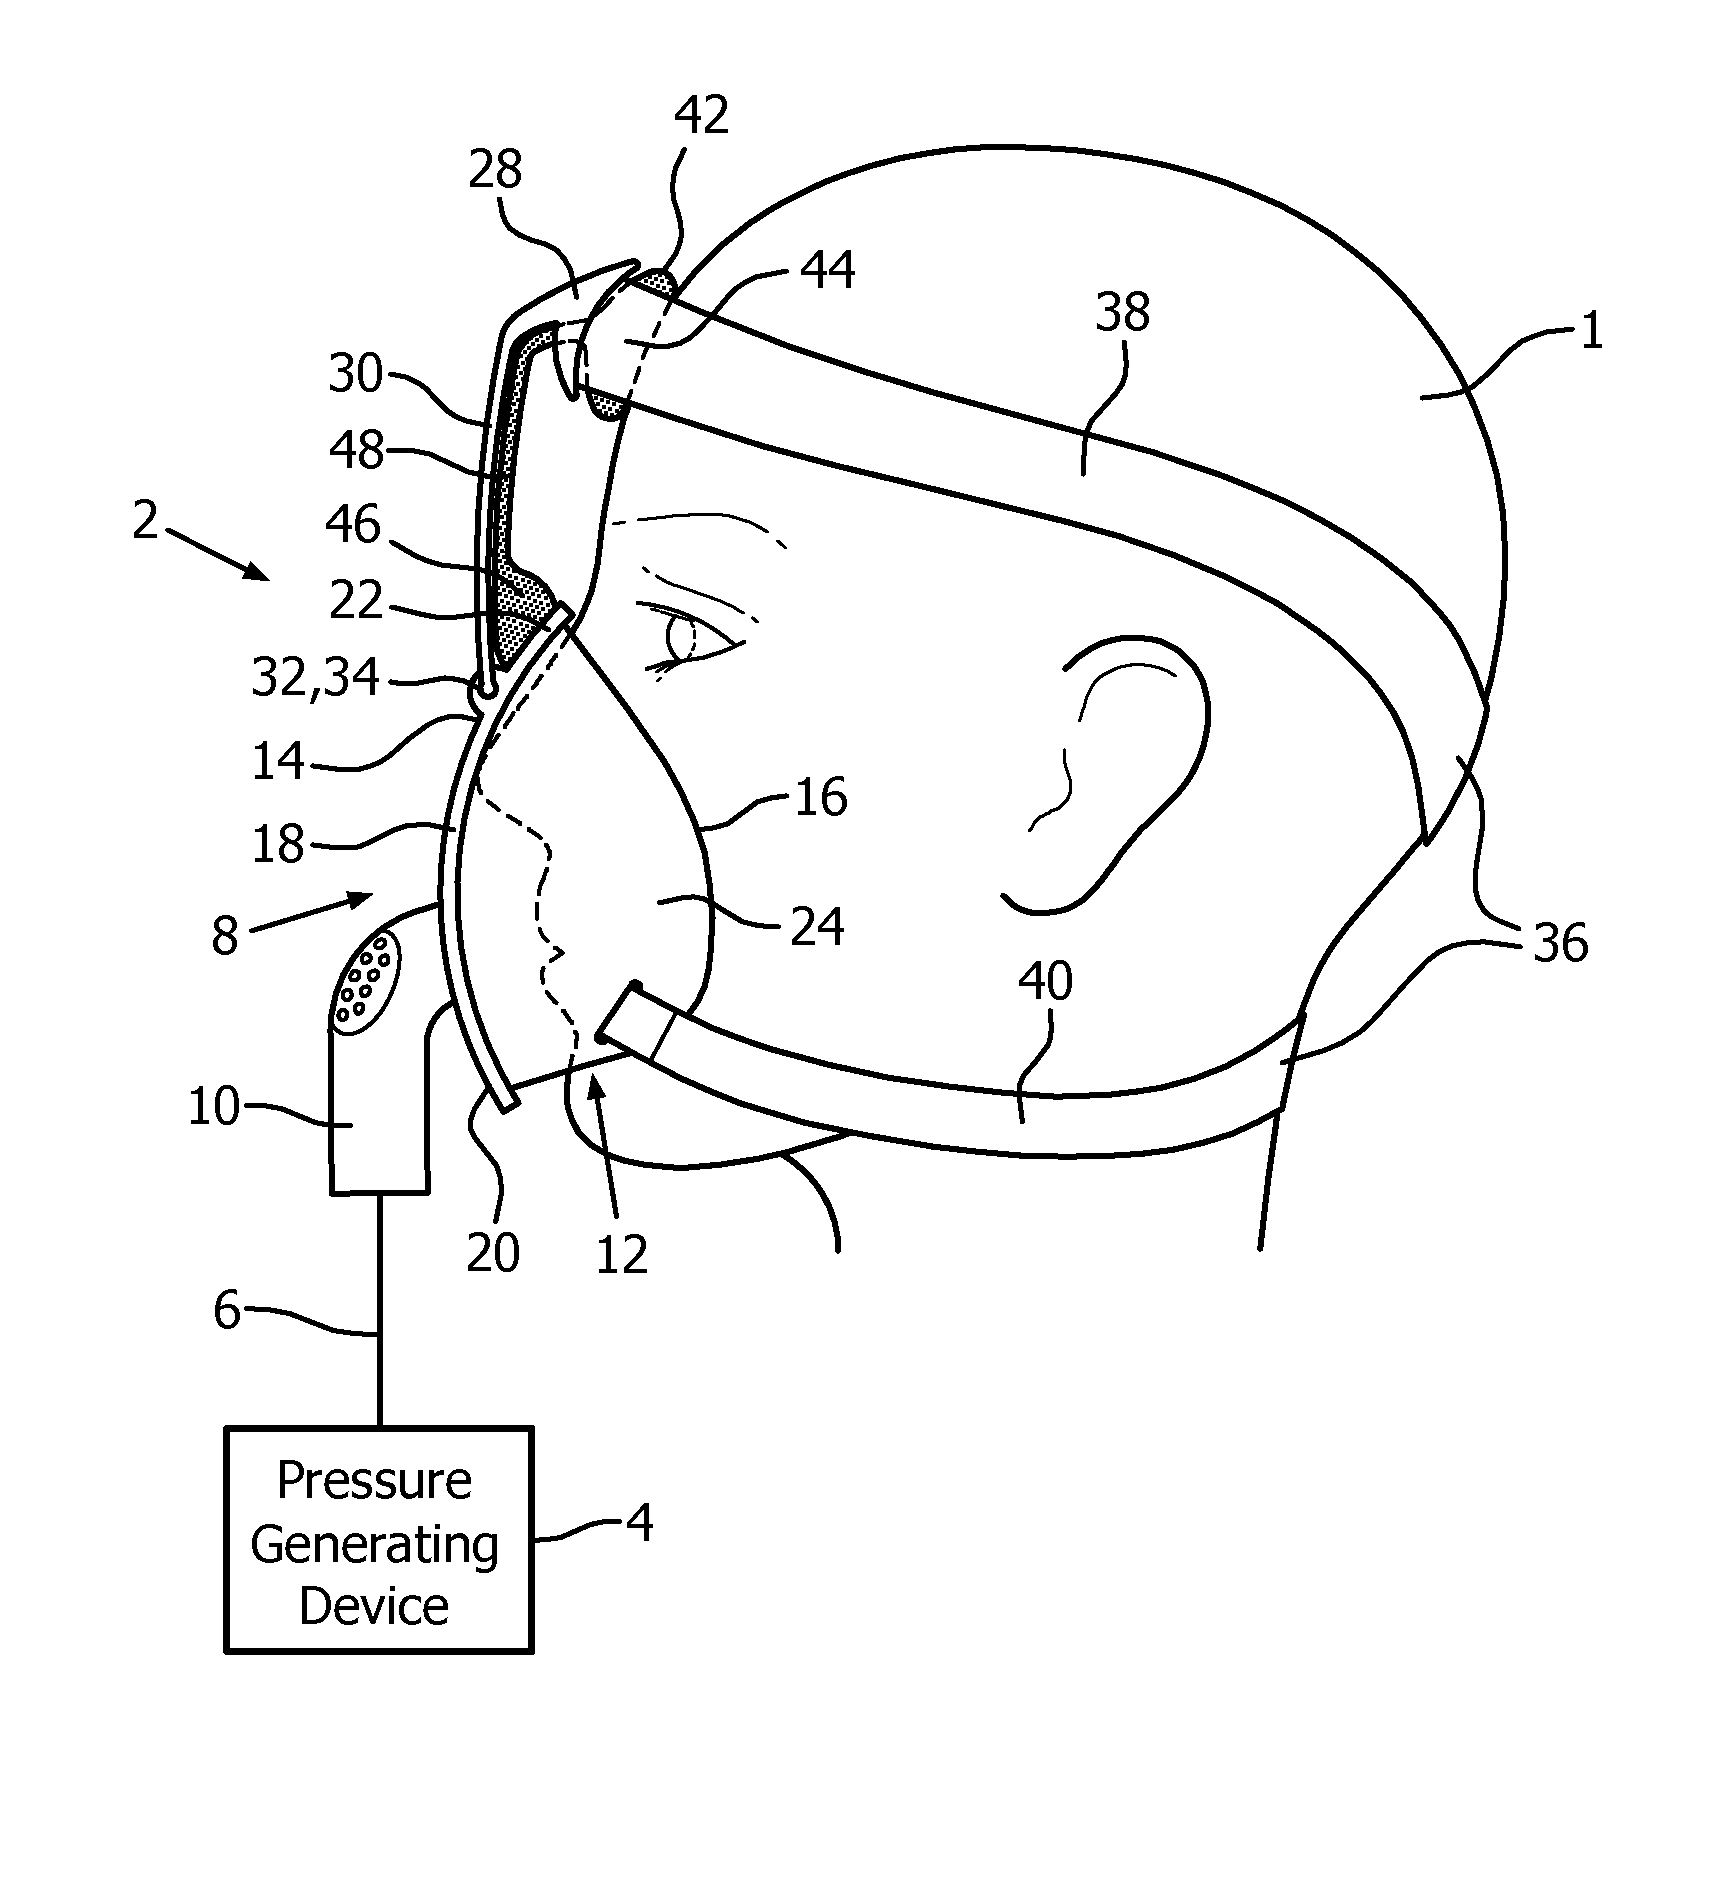 Patient interface device with nose bridge adjustment